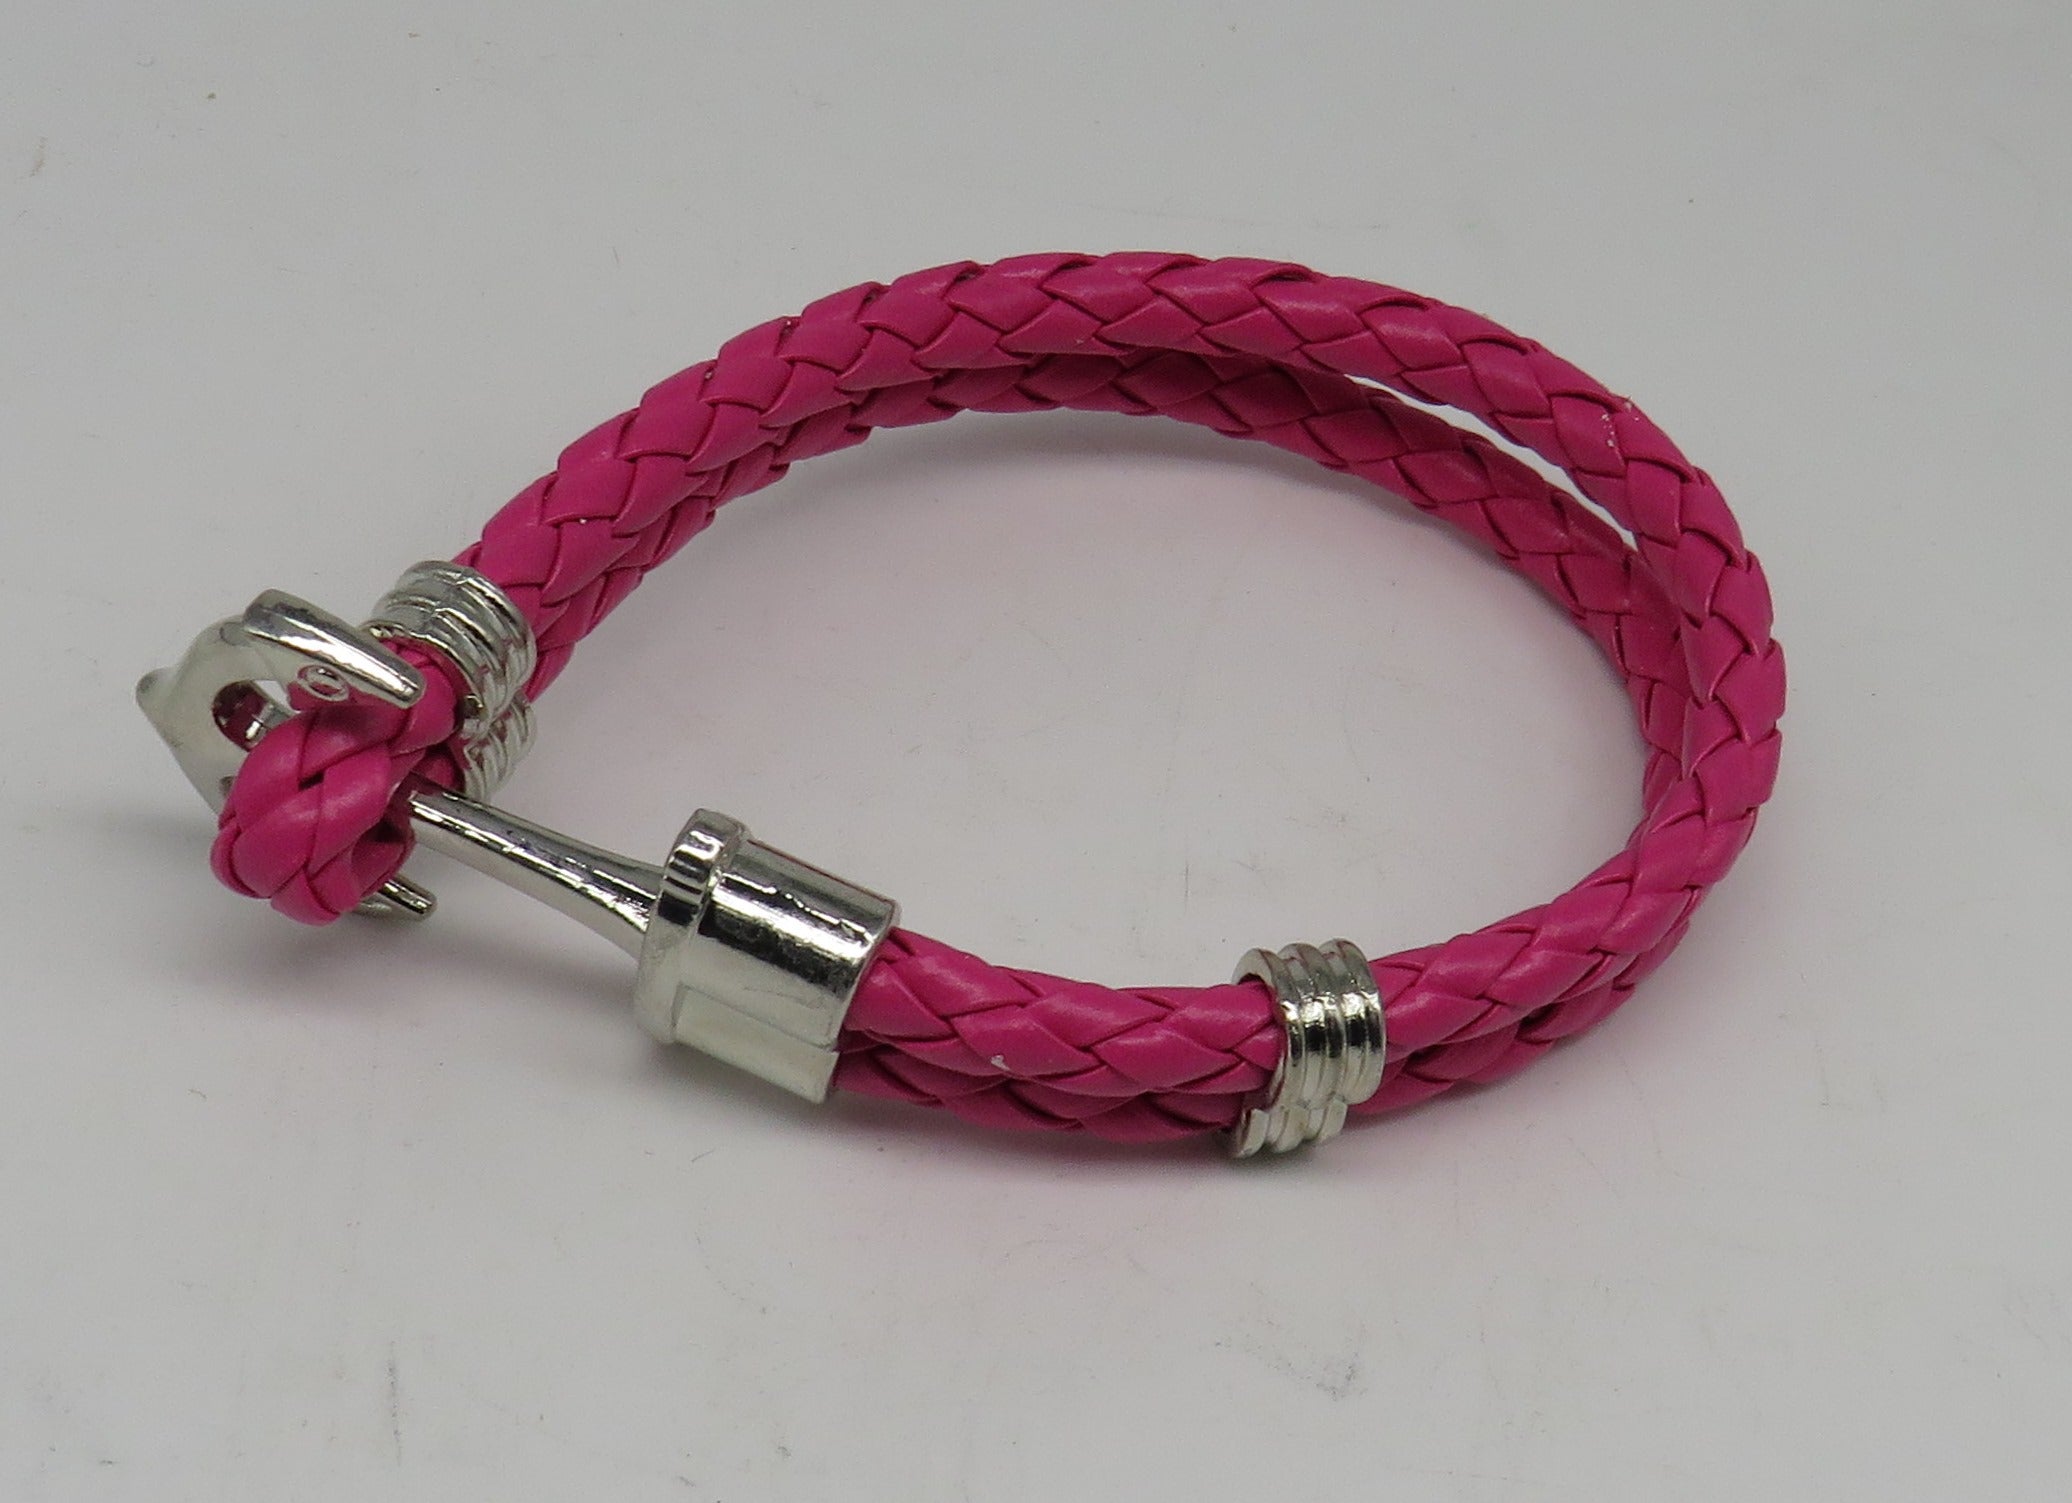 Unisex Leather Handmade Braided Cuff Anchor Bangle Bracelet Wristband Rose Red-Silver